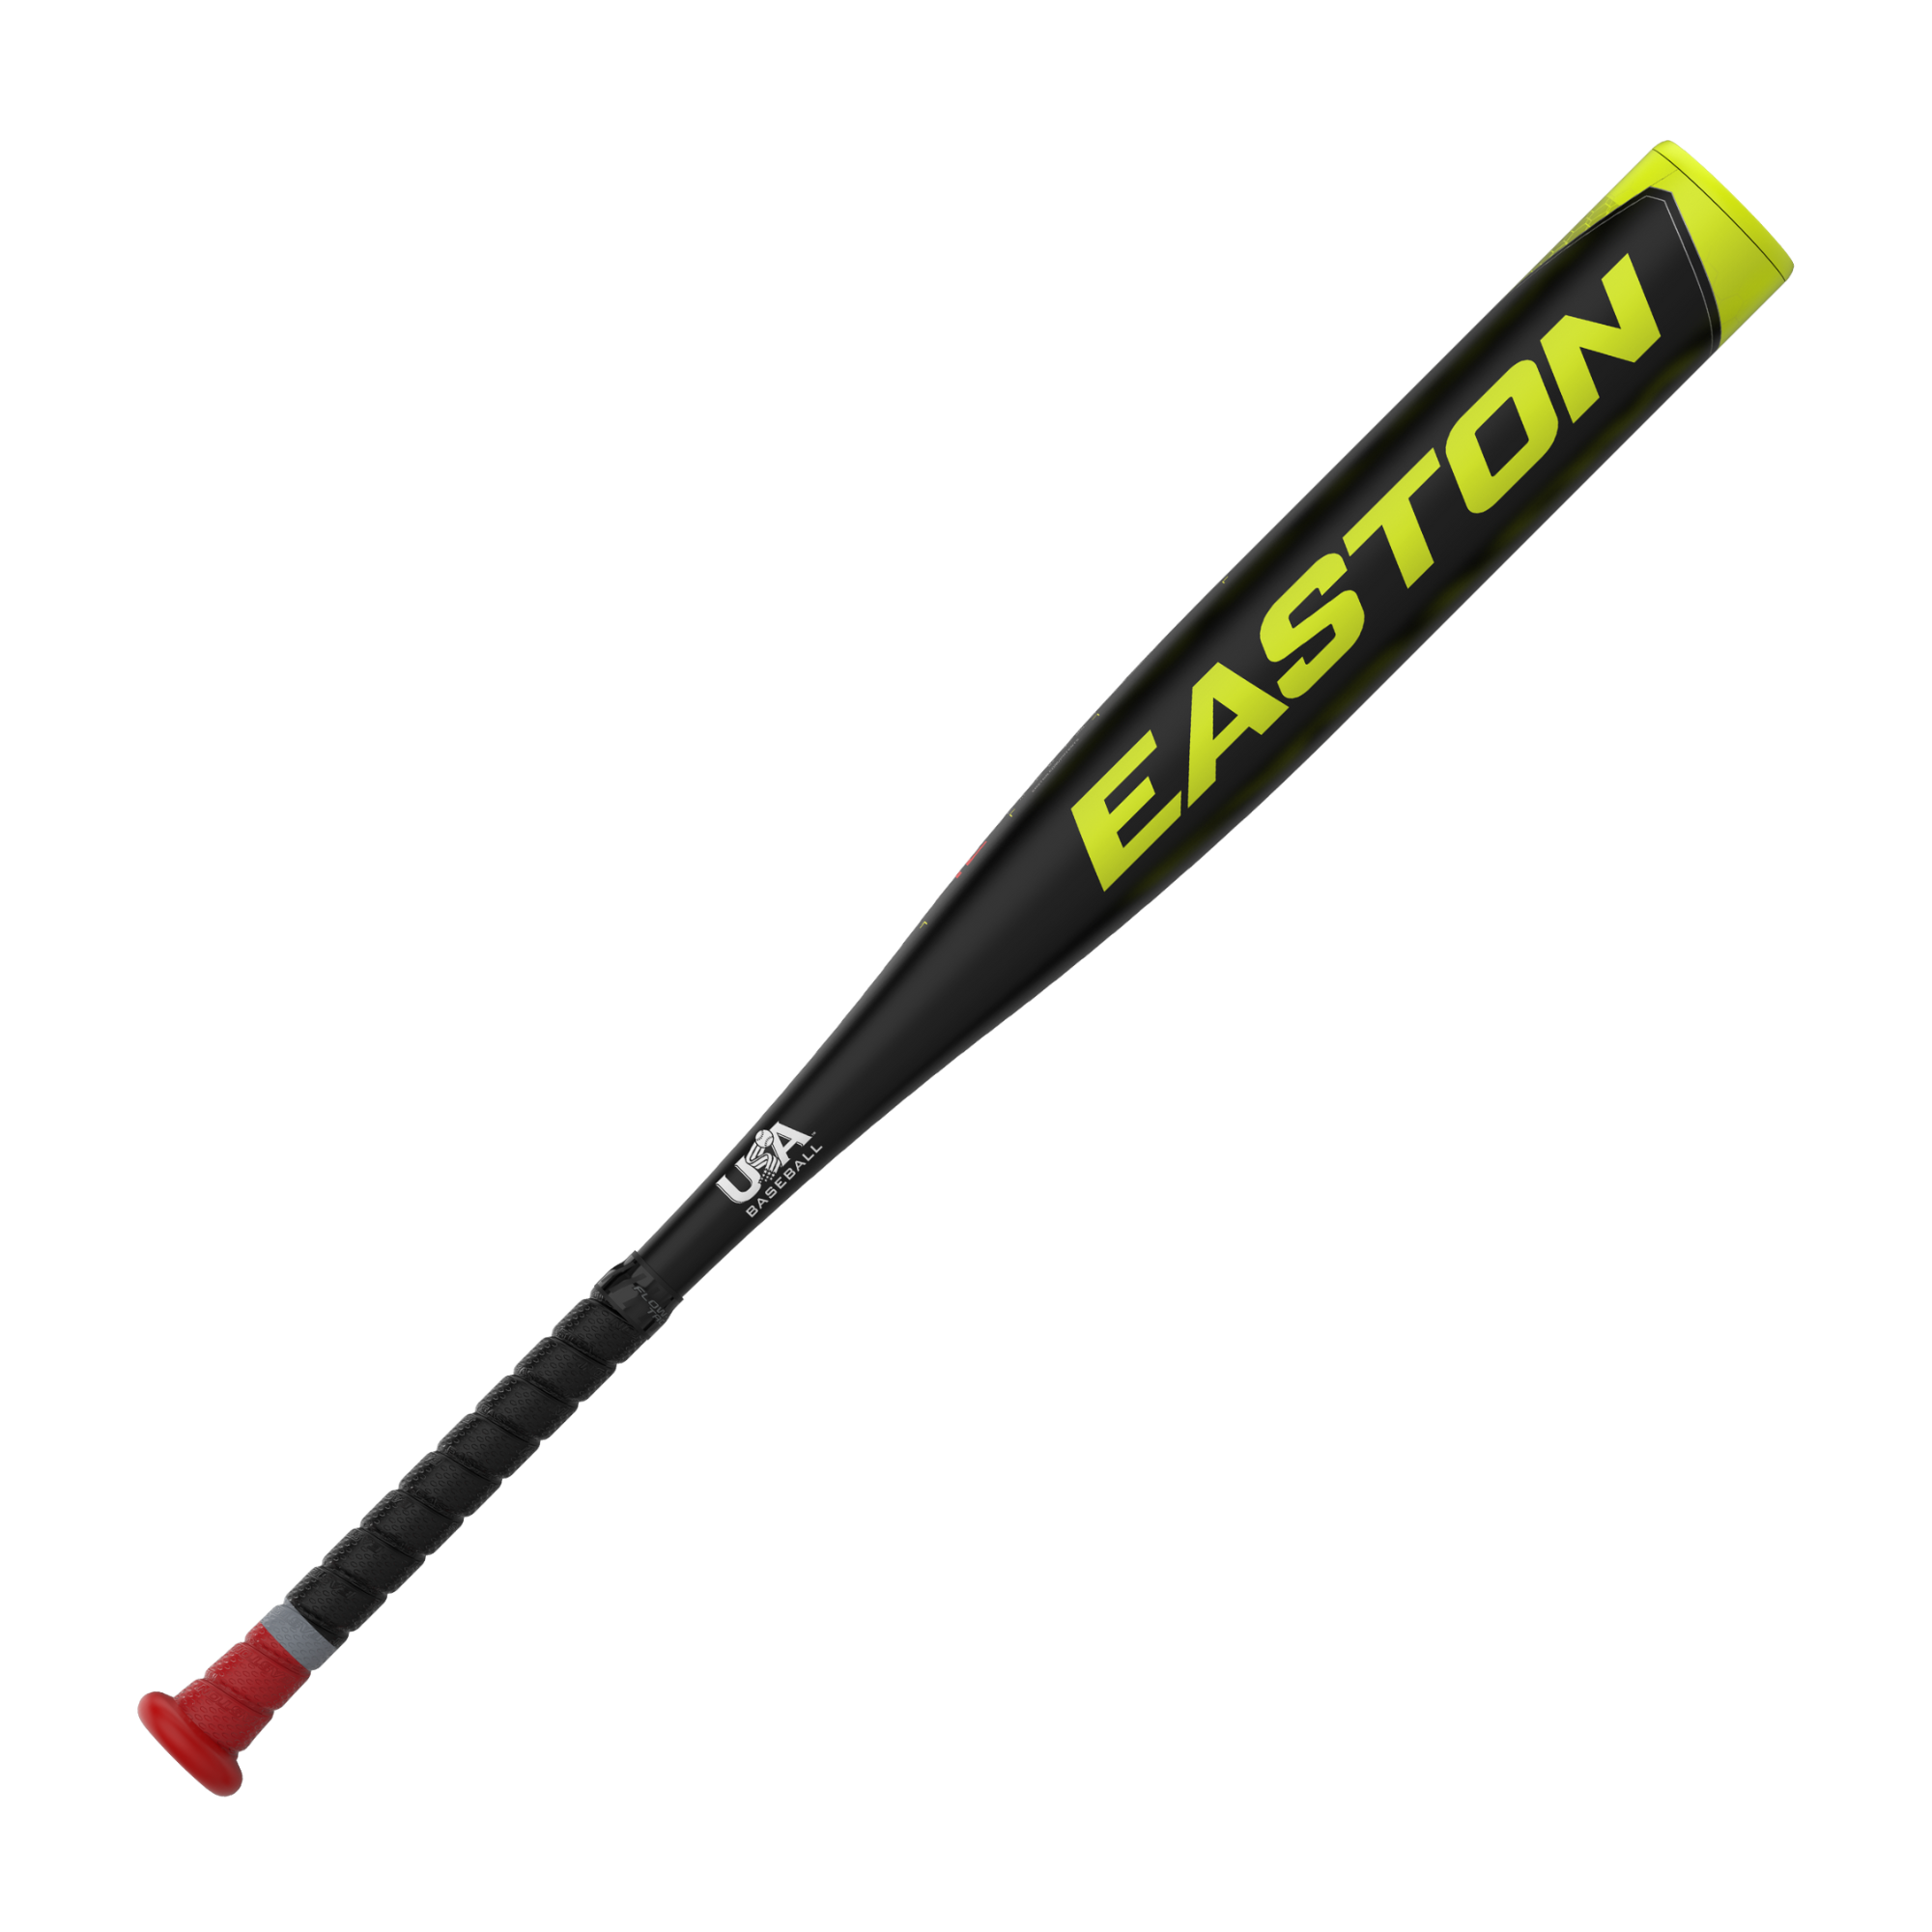 Easton ADV1-12 (2 5/8" Barrel) USA Youth Baseball Bat